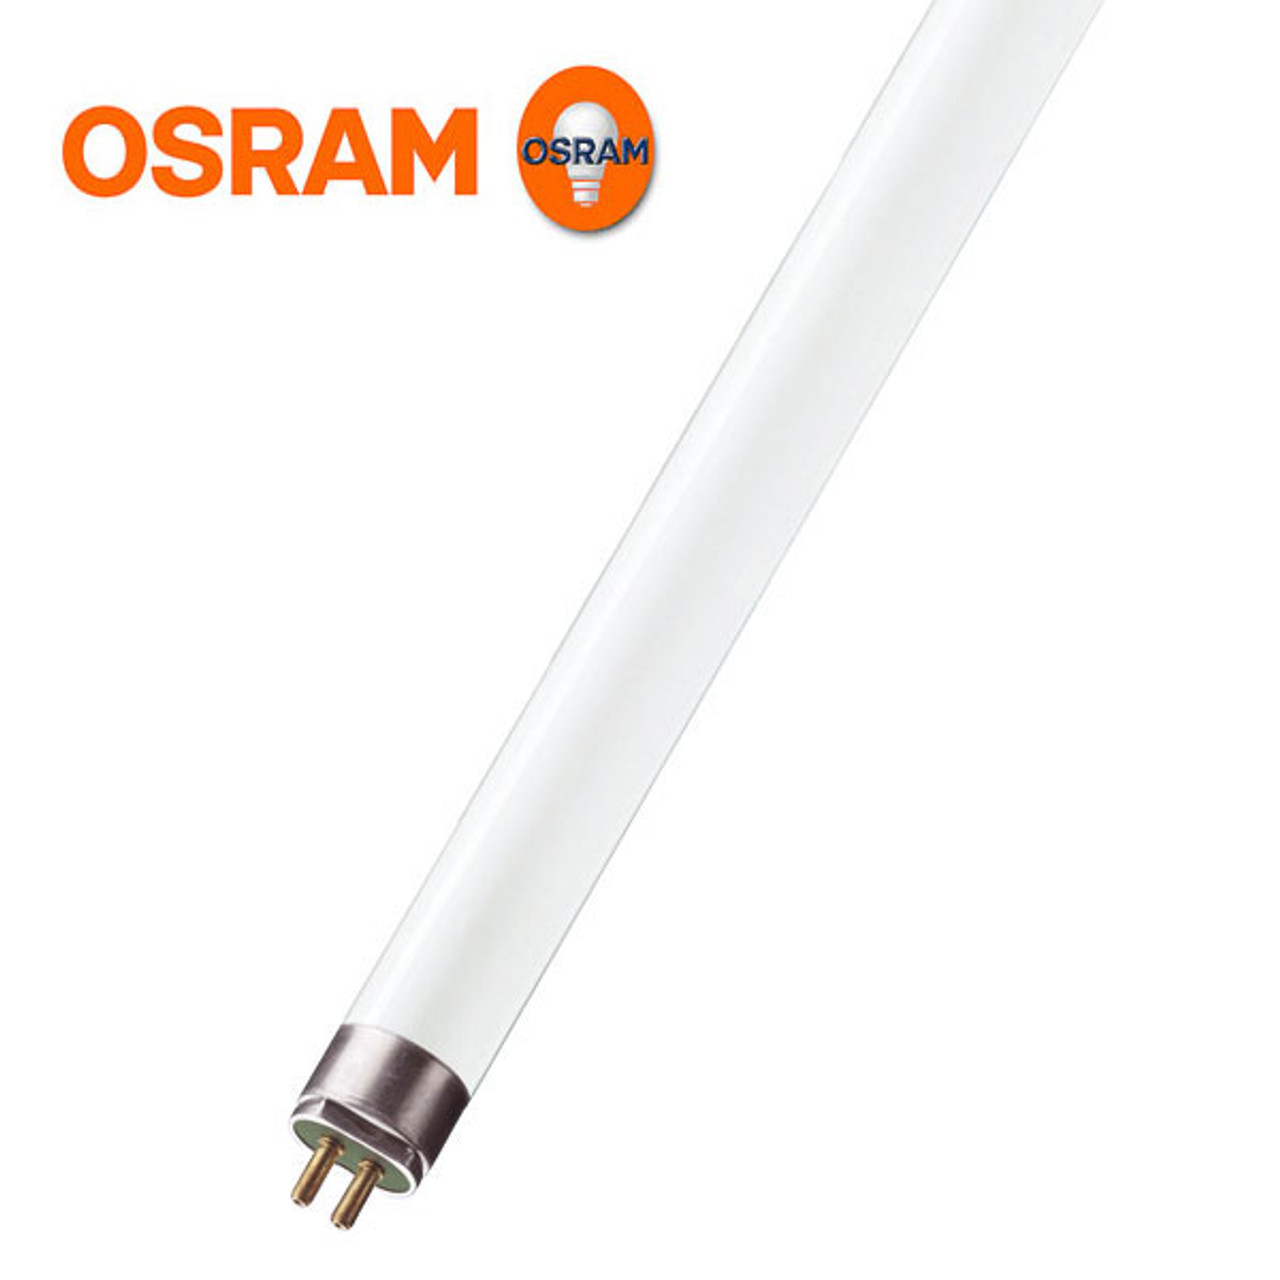 Osram 9" 6W C930 Deluxe Warm White 3000K